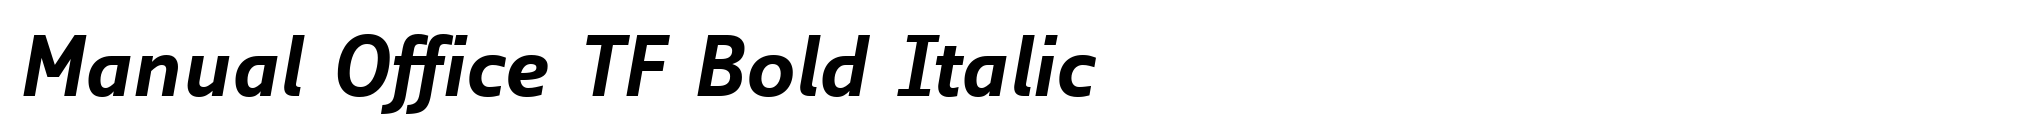 Manual Office TF Bold Italic image